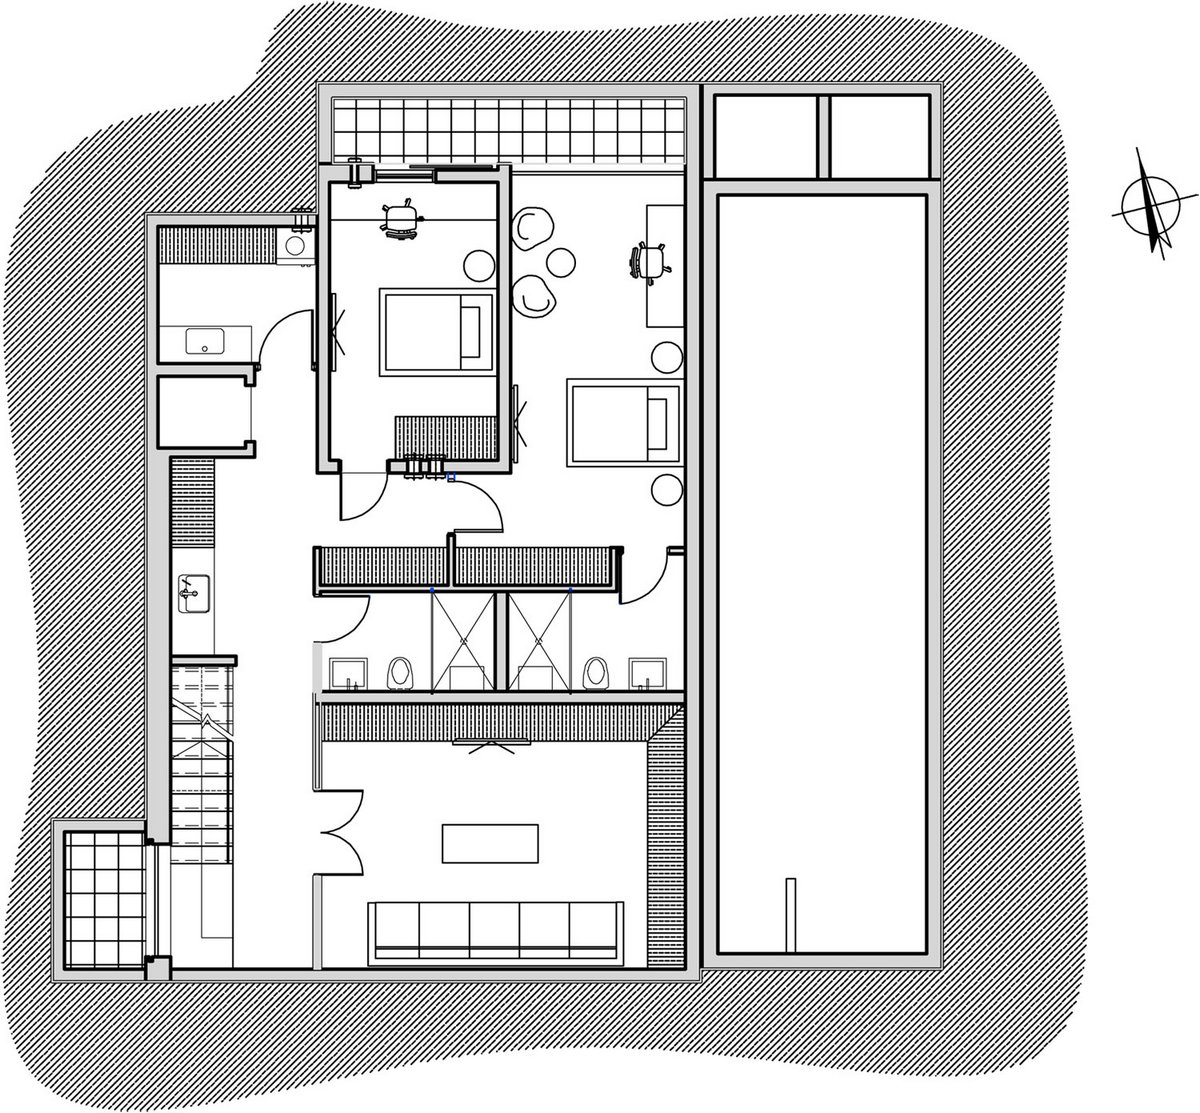 Israelevitz Architects, дизайн двухэтажного дома, дизайн двухэтажных домов фото, дизайн двухэтажных домов внутри, дизайн интерьера двухэтажного дома